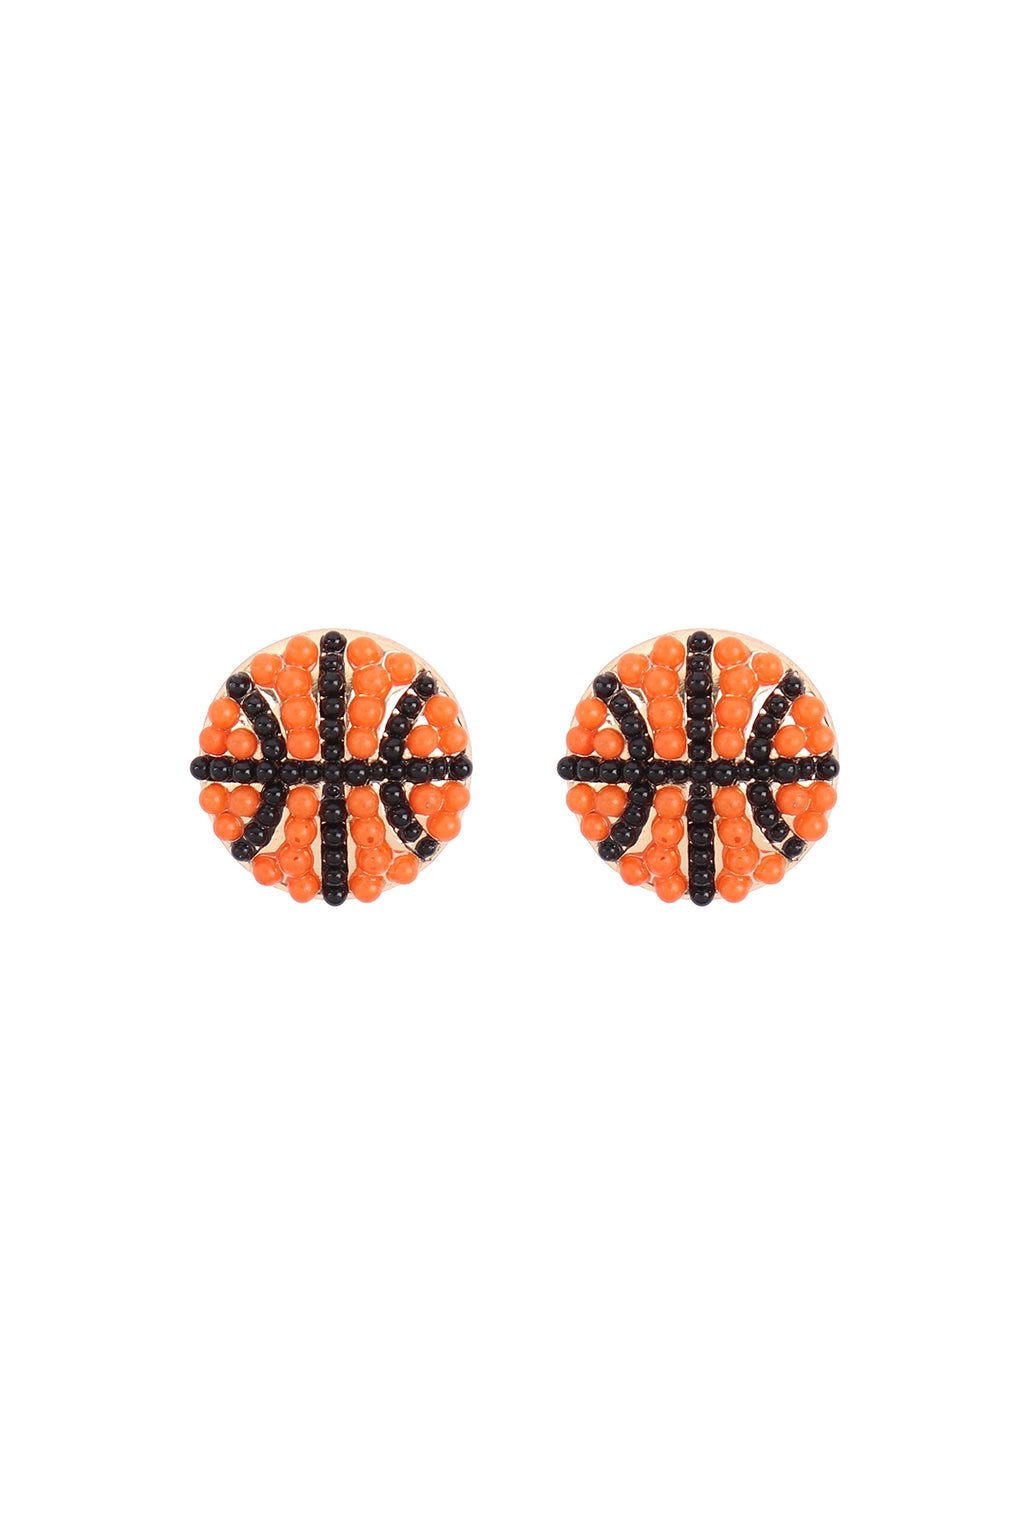 Sports Seed Bead Stud Earrings Basketball - Pack of 6